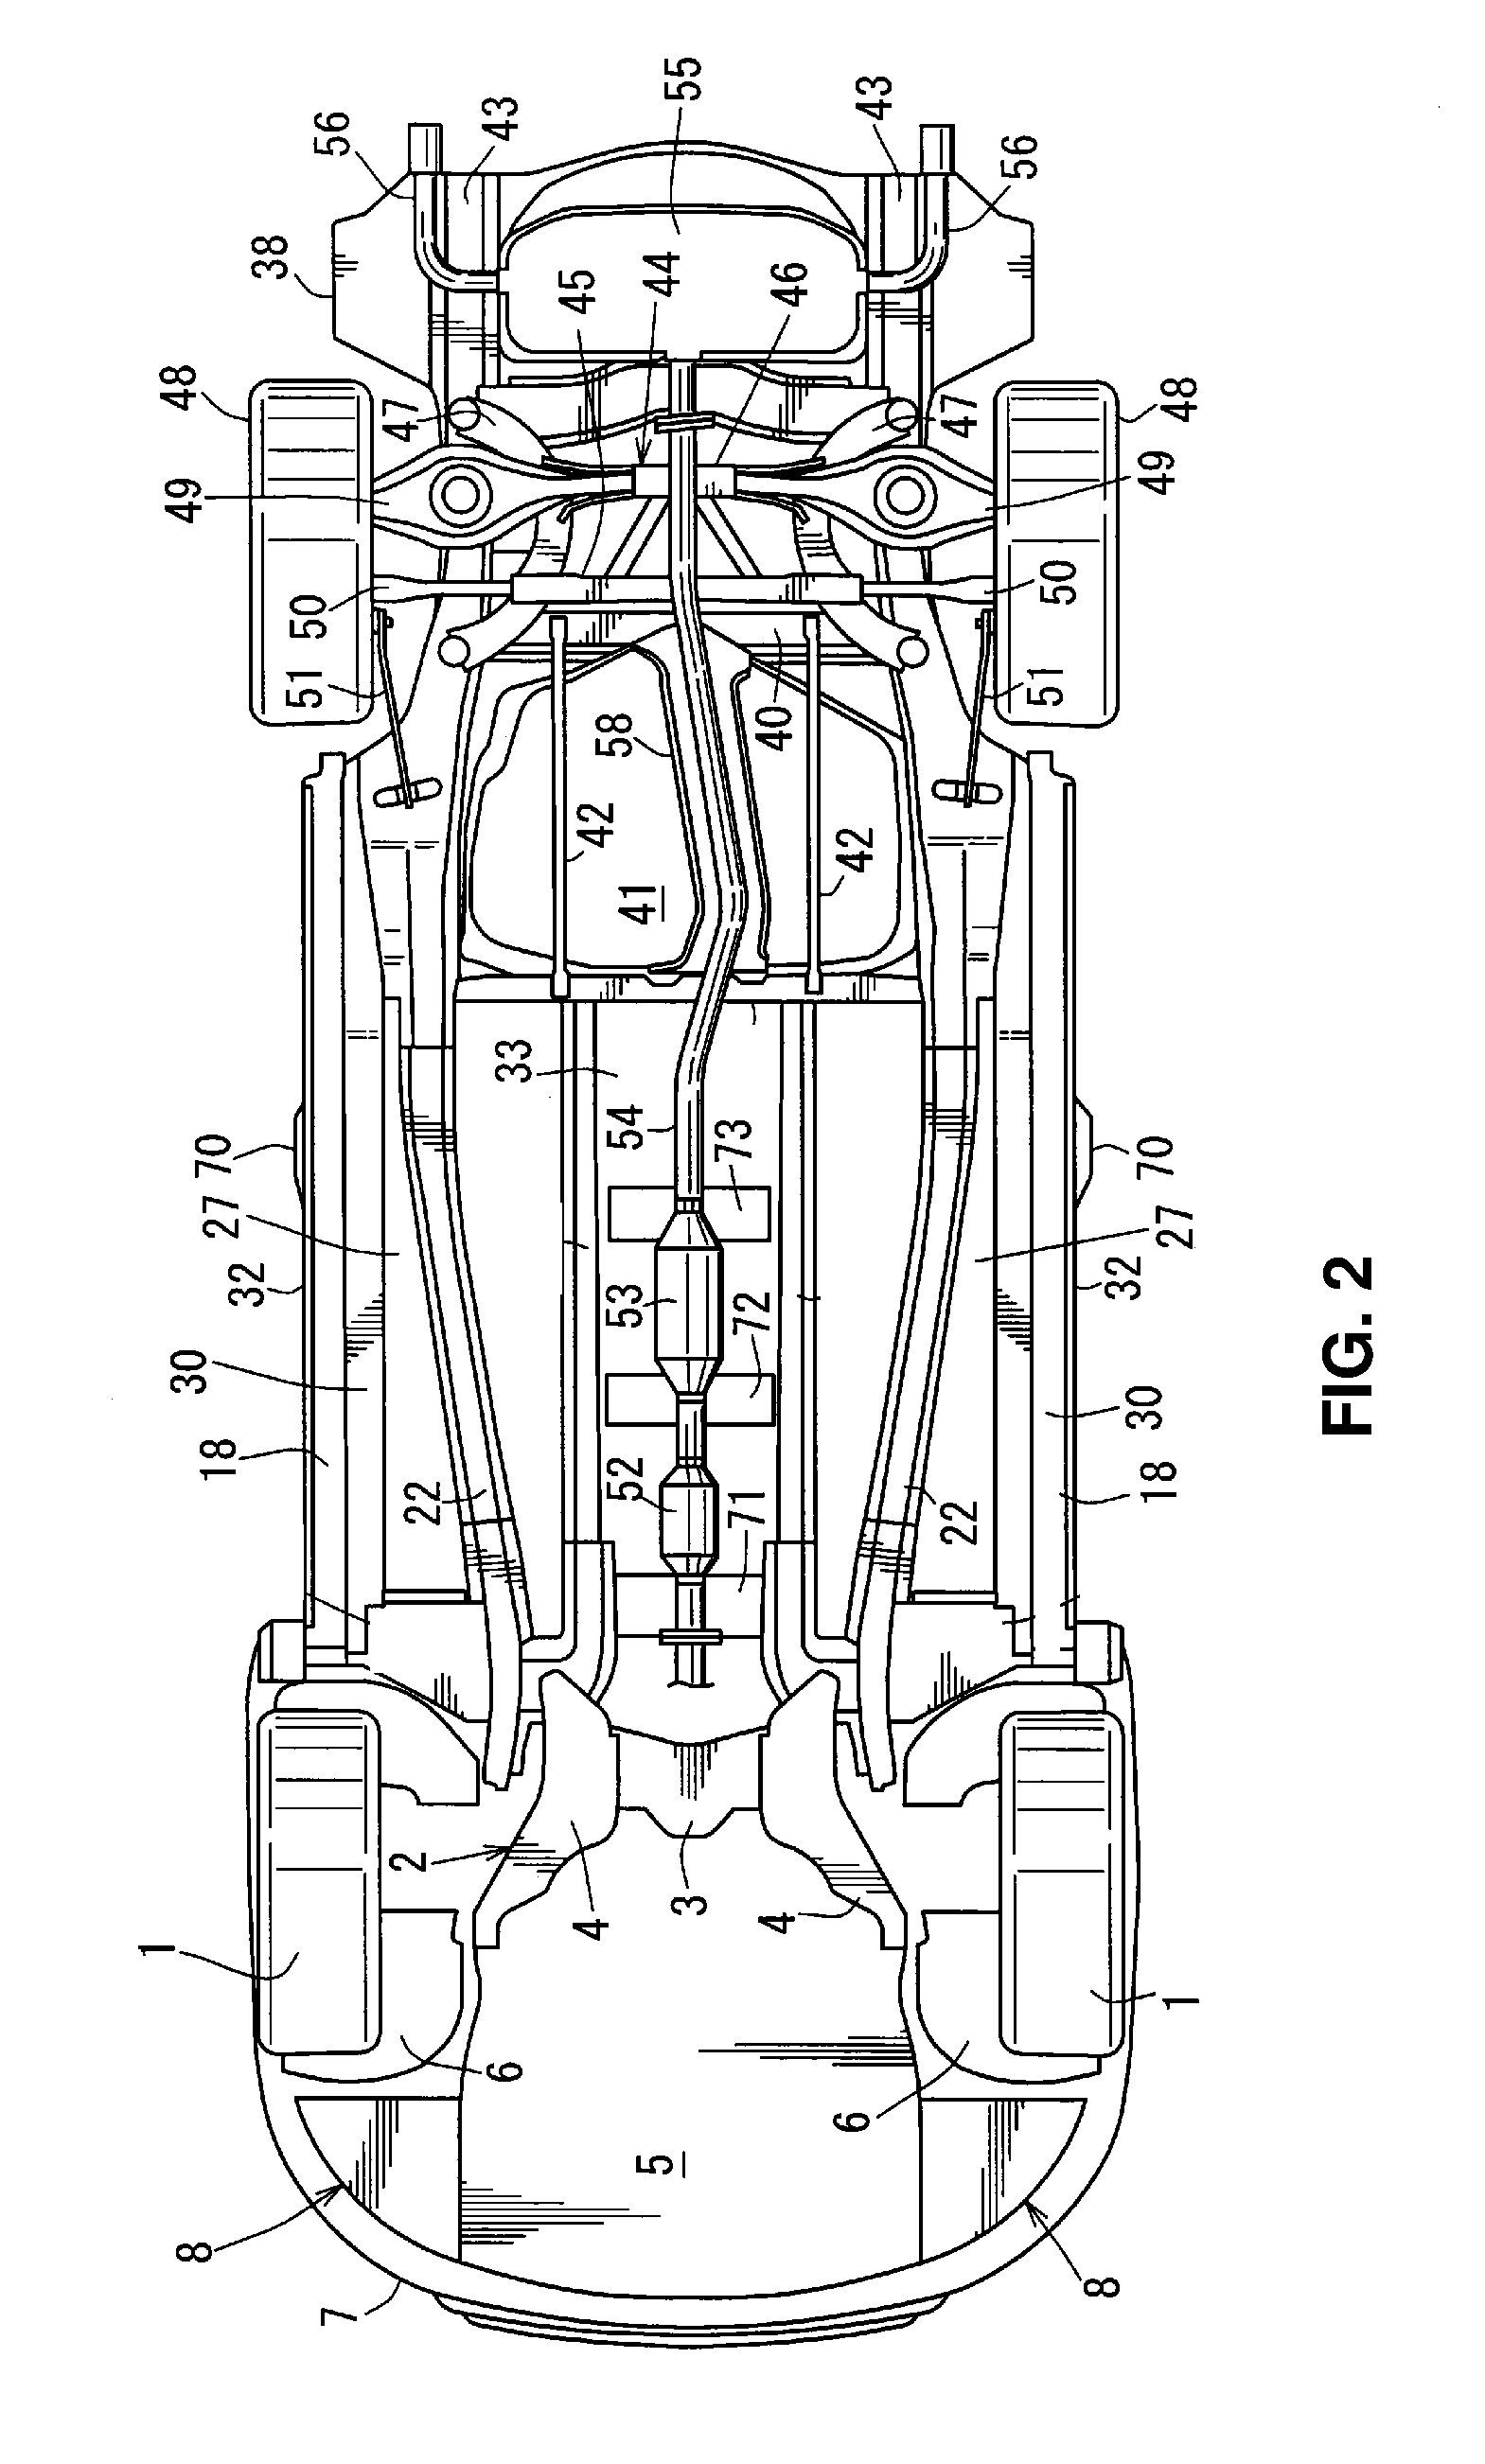 Underfloor structure of automotive vehicle